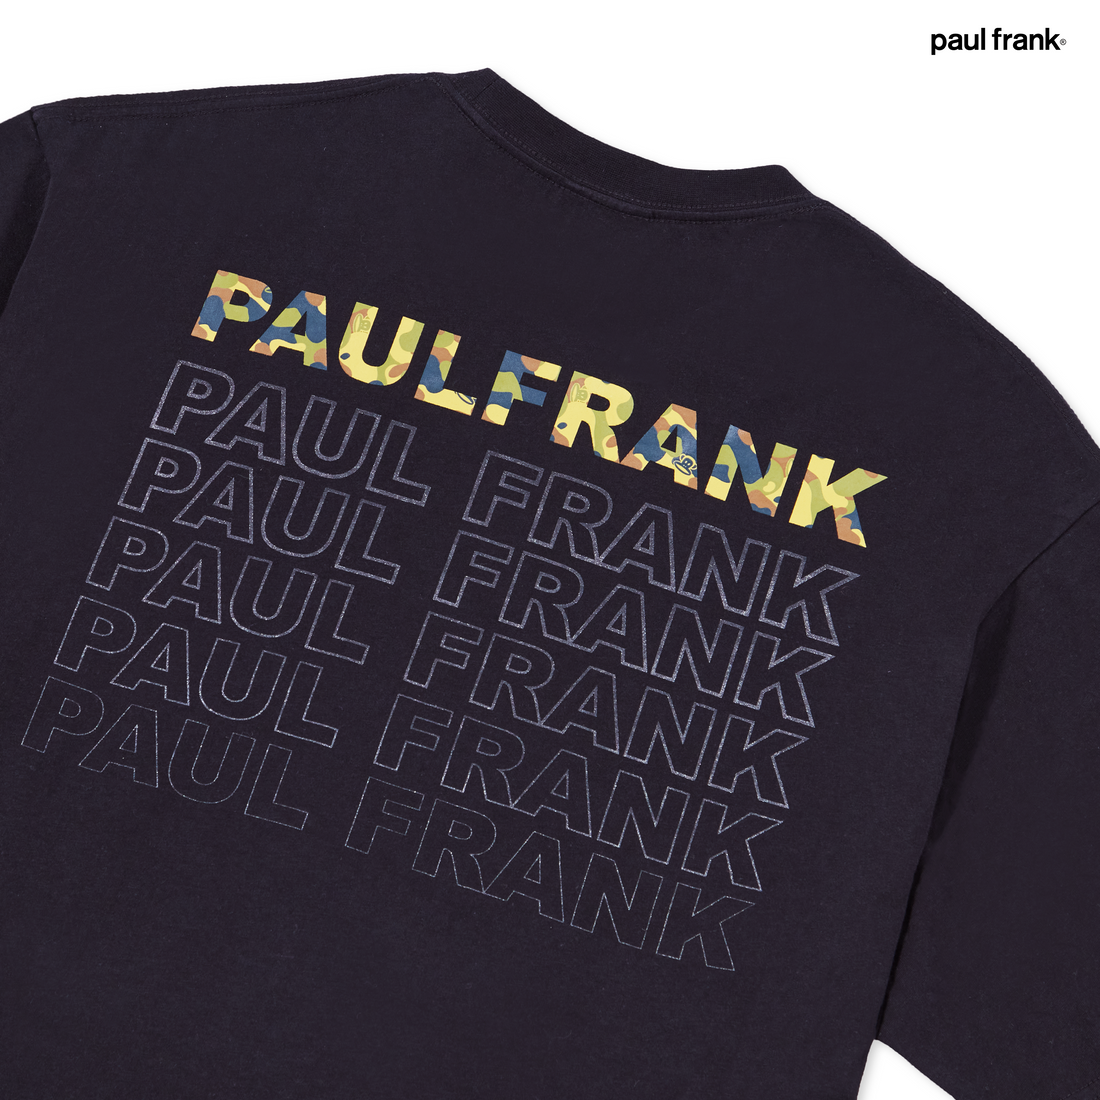 PAUL FRANK MENS PAUL FRANK OG CAMOUFLAGE TEES